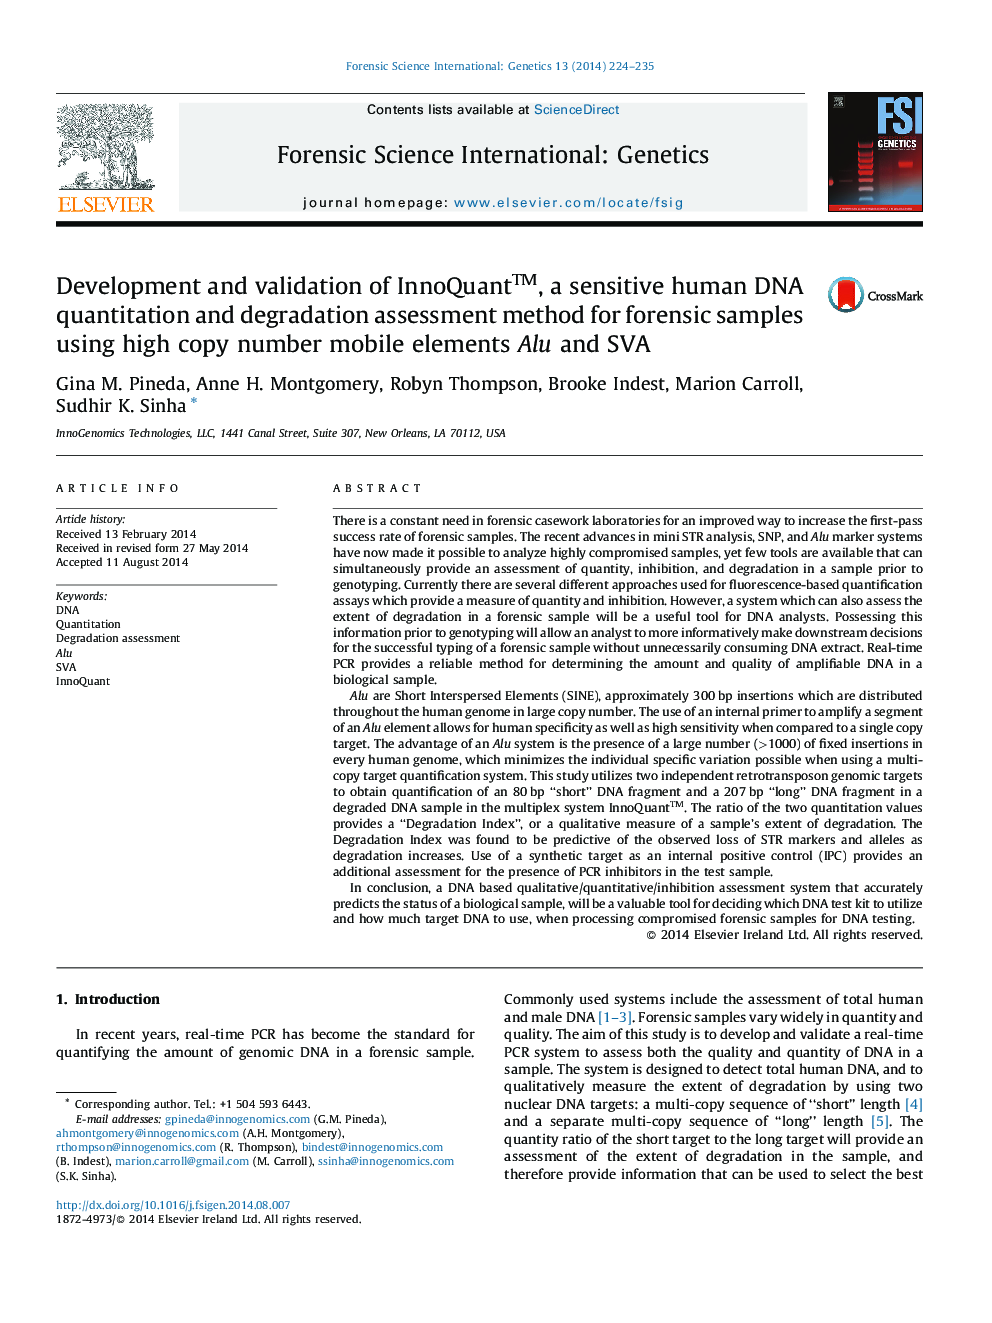 Development and validation of InnoQuantâ¢, a sensitive human DNA quantitation and degradation assessment method for forensic samples using high copy number mobile elements Alu and SVA